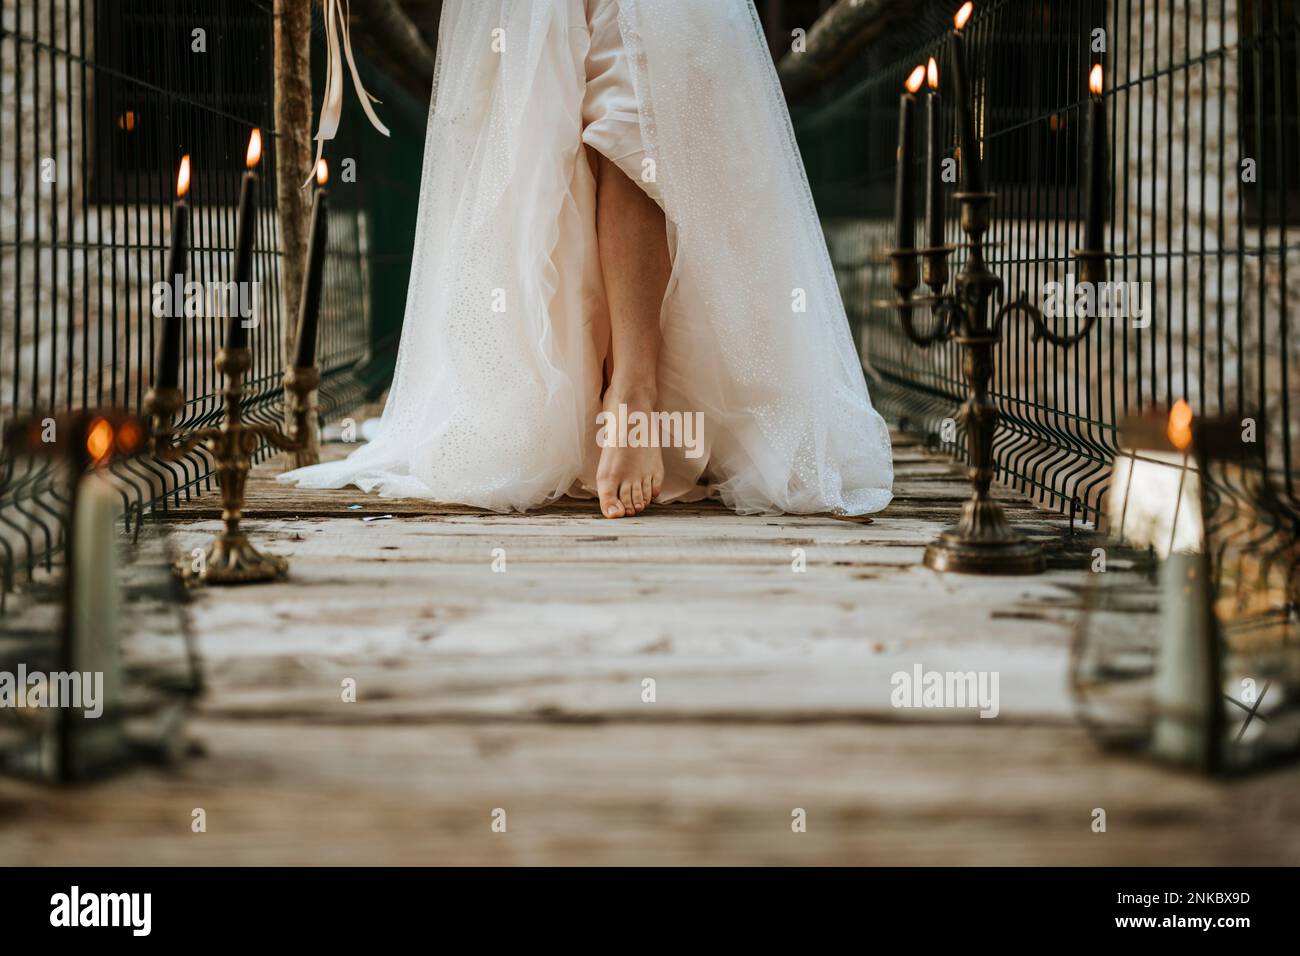 Leg of bride on wooden bridge full of candles Stock Photo